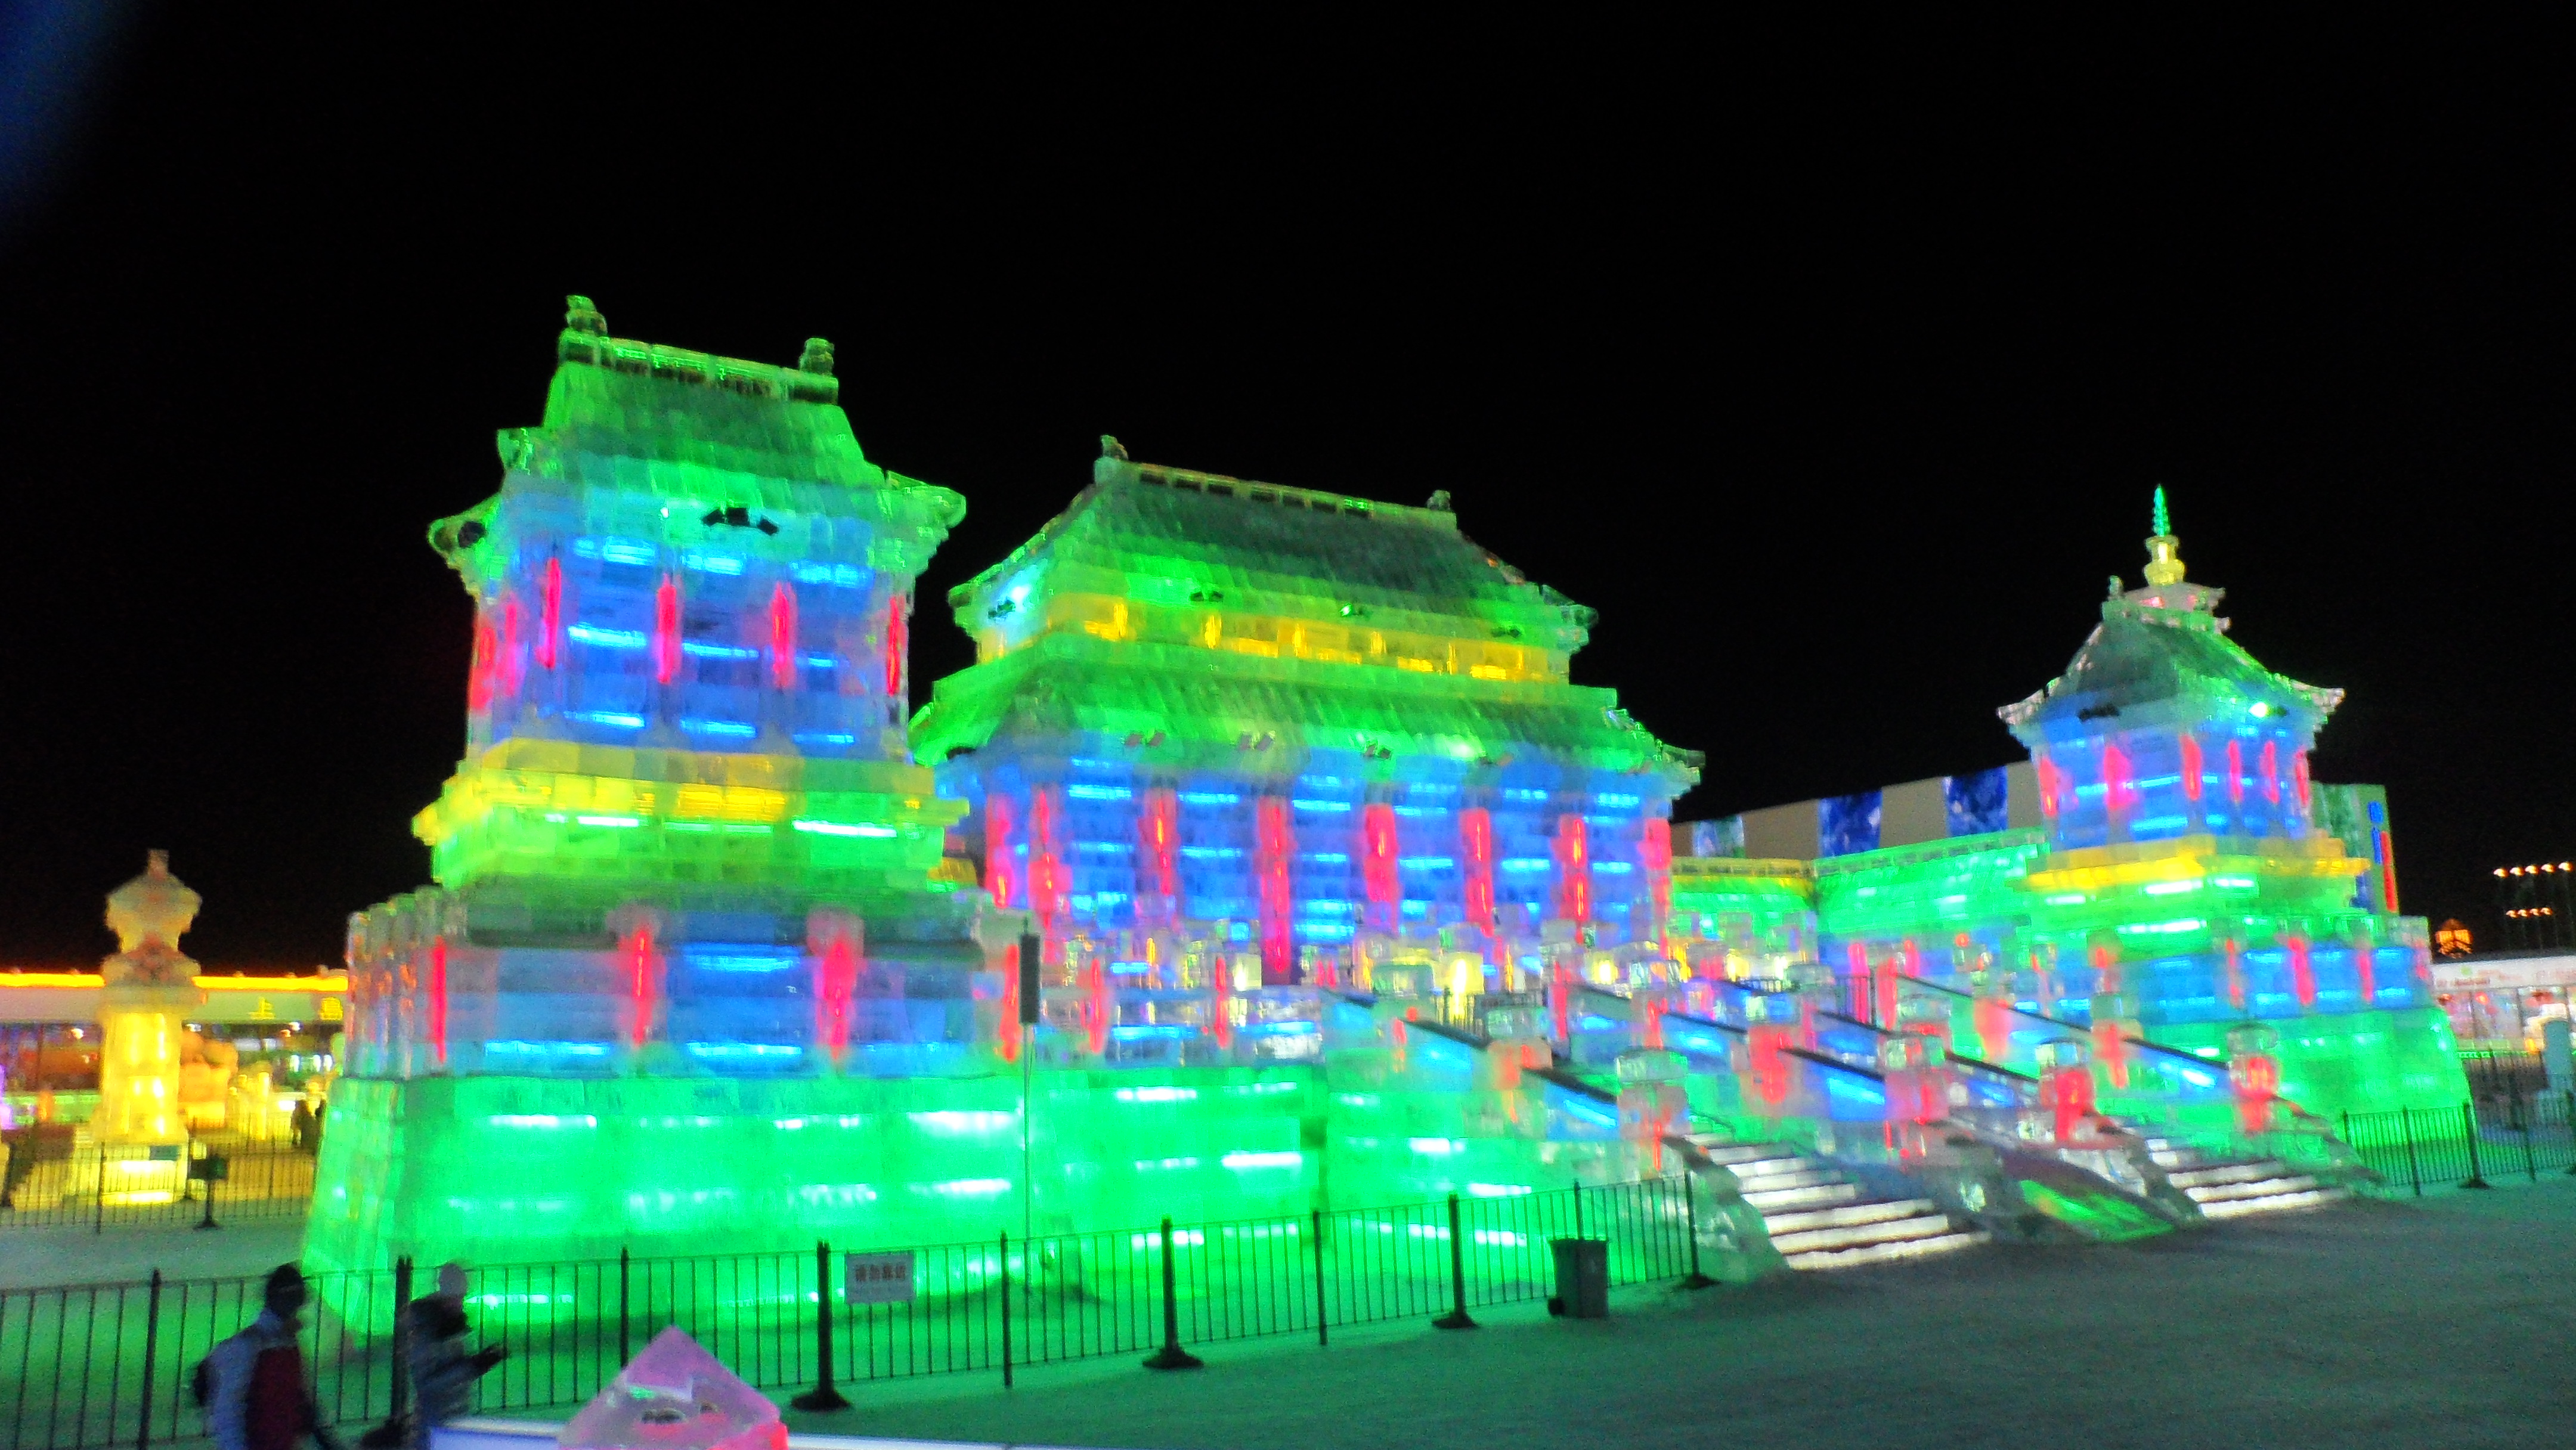 http://caseyinsuzhou.files.wordpress.com/2012/02/73-snow-and-ice-chinese-palace-night.jpg